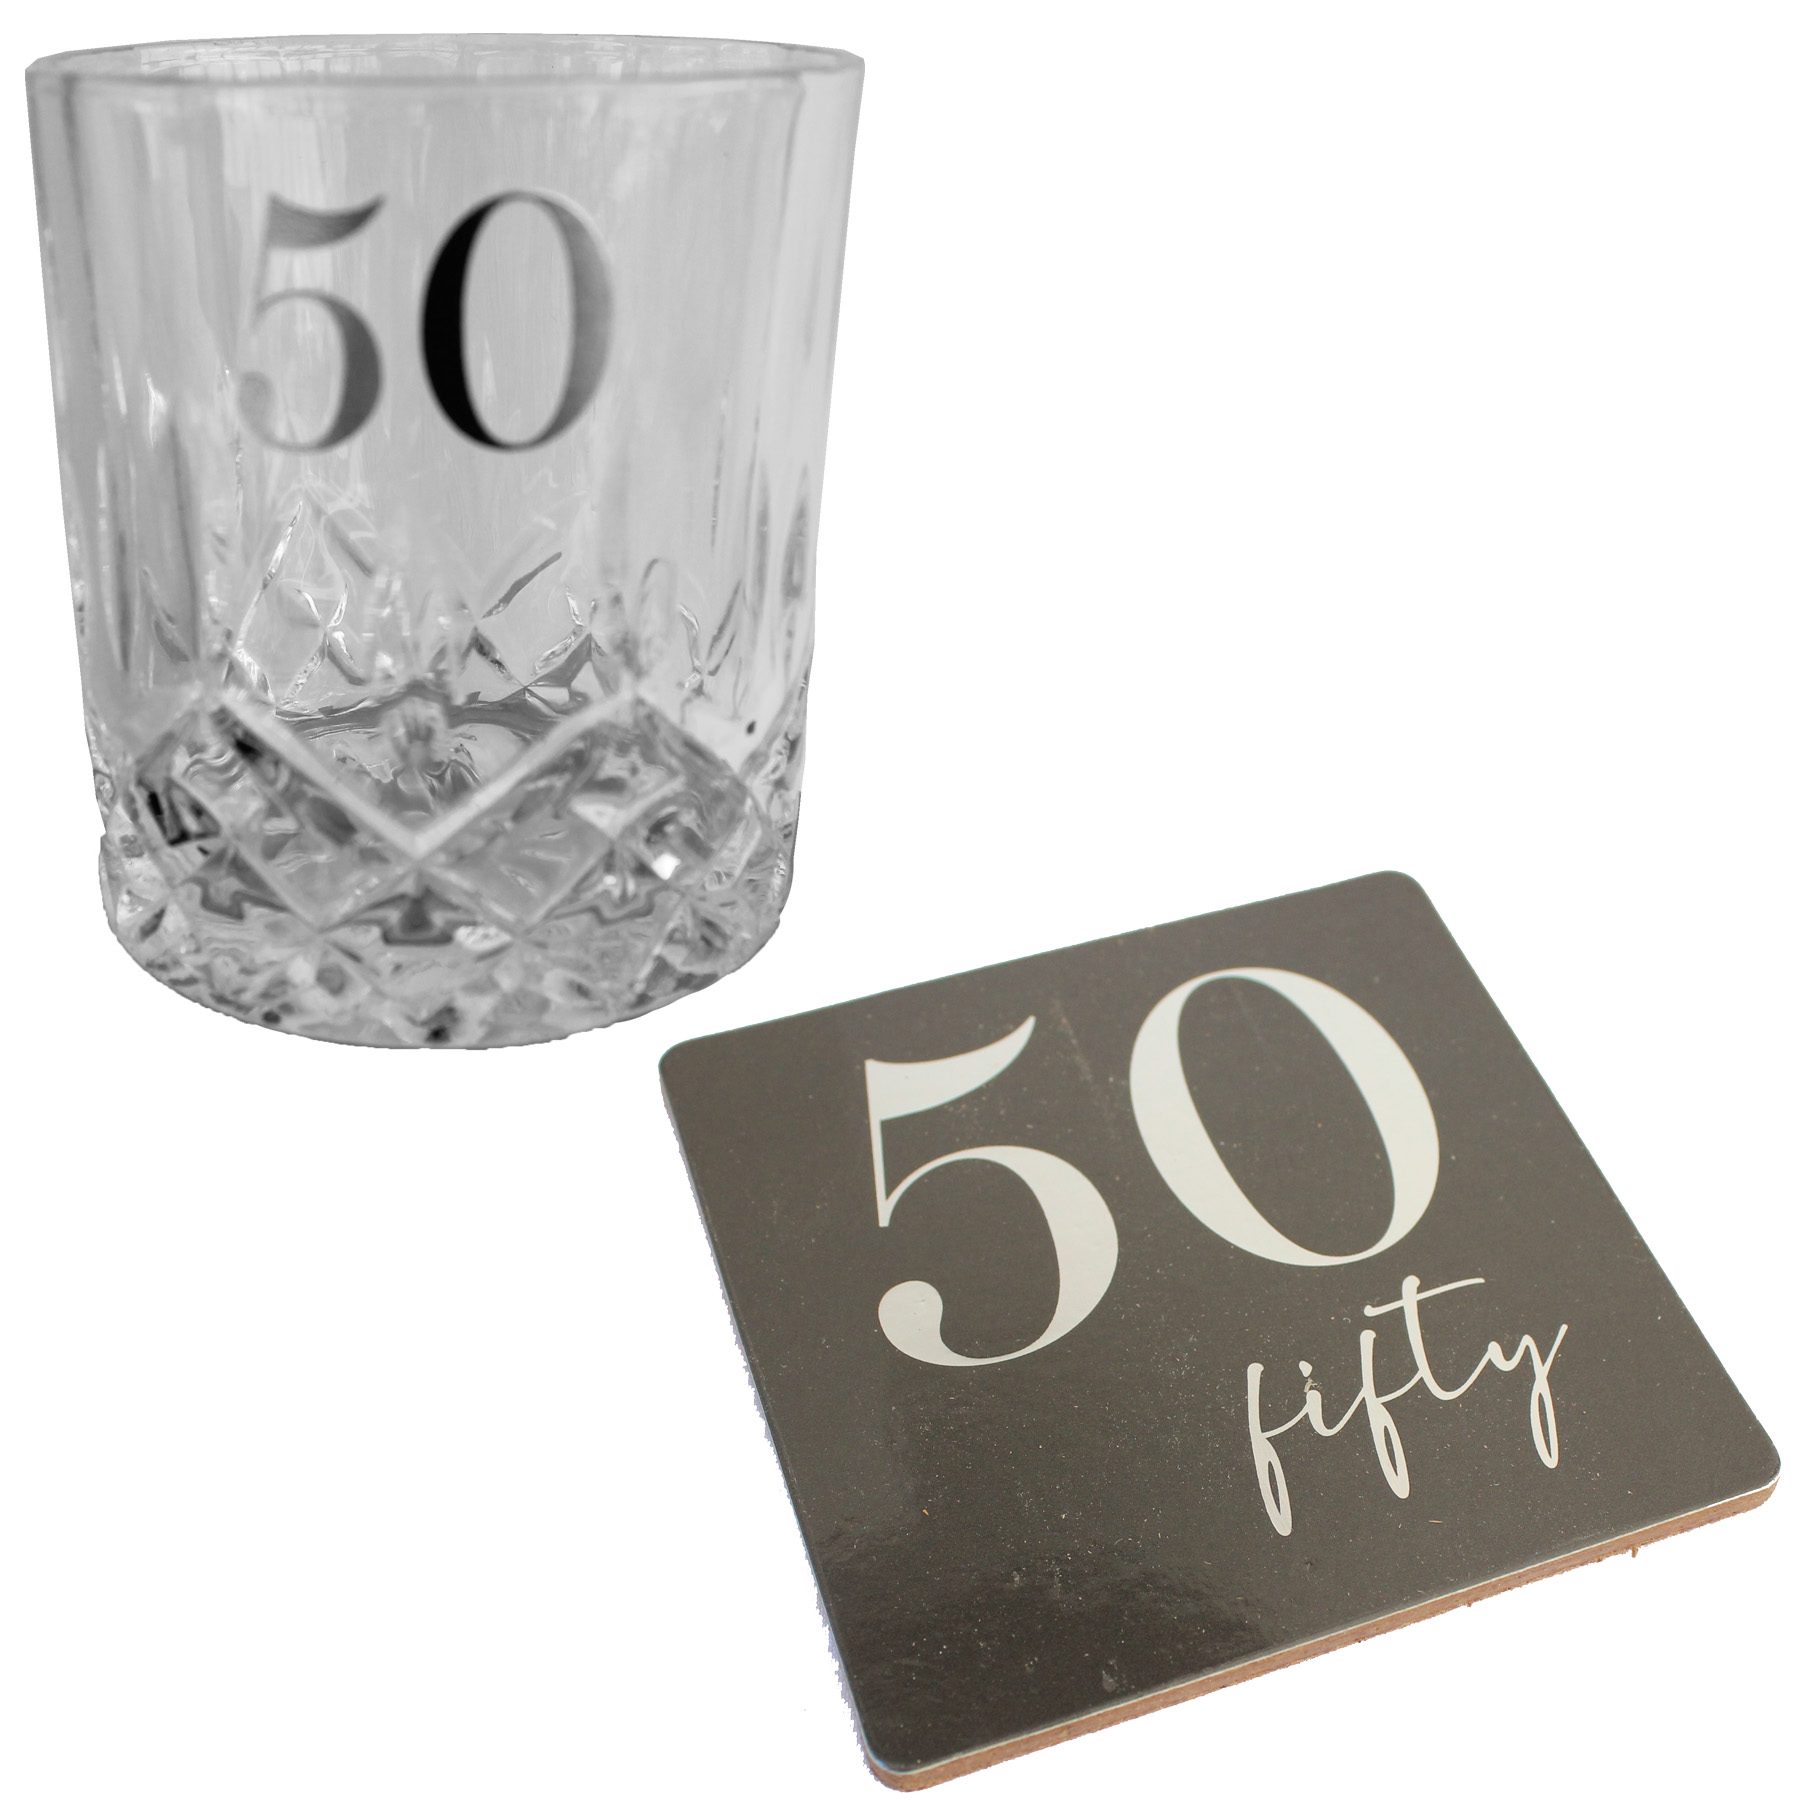 Cut Glass Whisky Tumbler and Coaster Set Gift Box - 50th Birthday